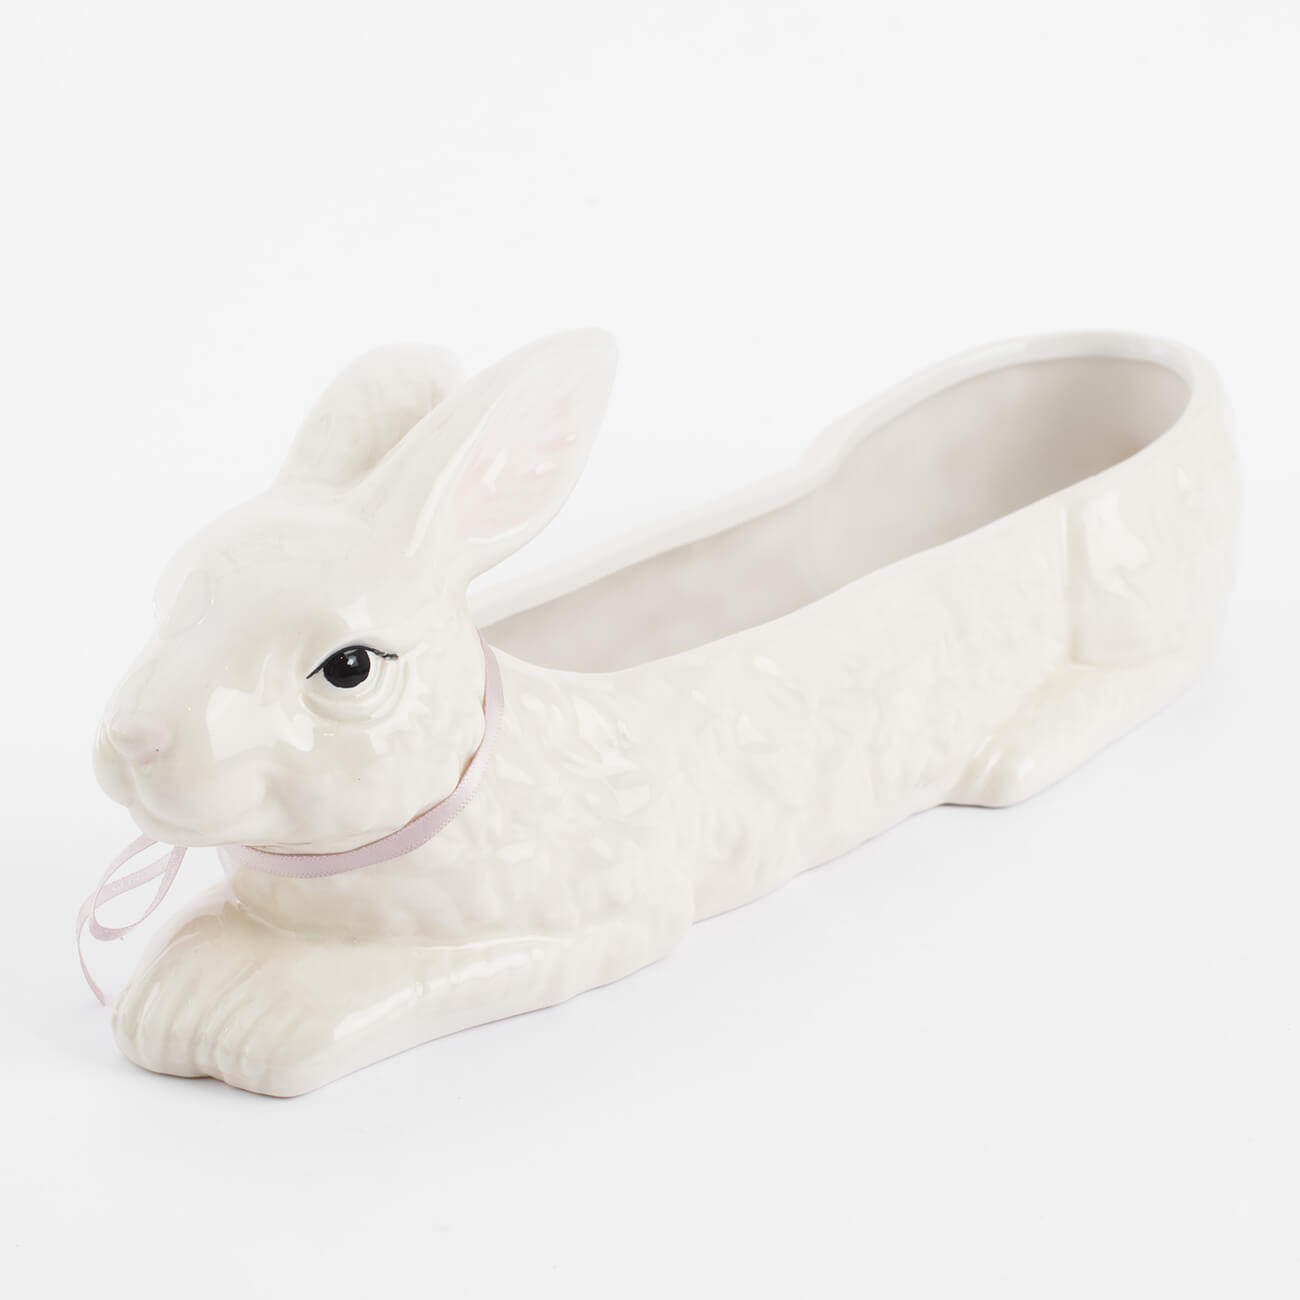 Конфетница, 34х12 см, керамика, молочная, Кролик, Natural easter конфетница 16х14 см керамика серо молочная кролики pure easter